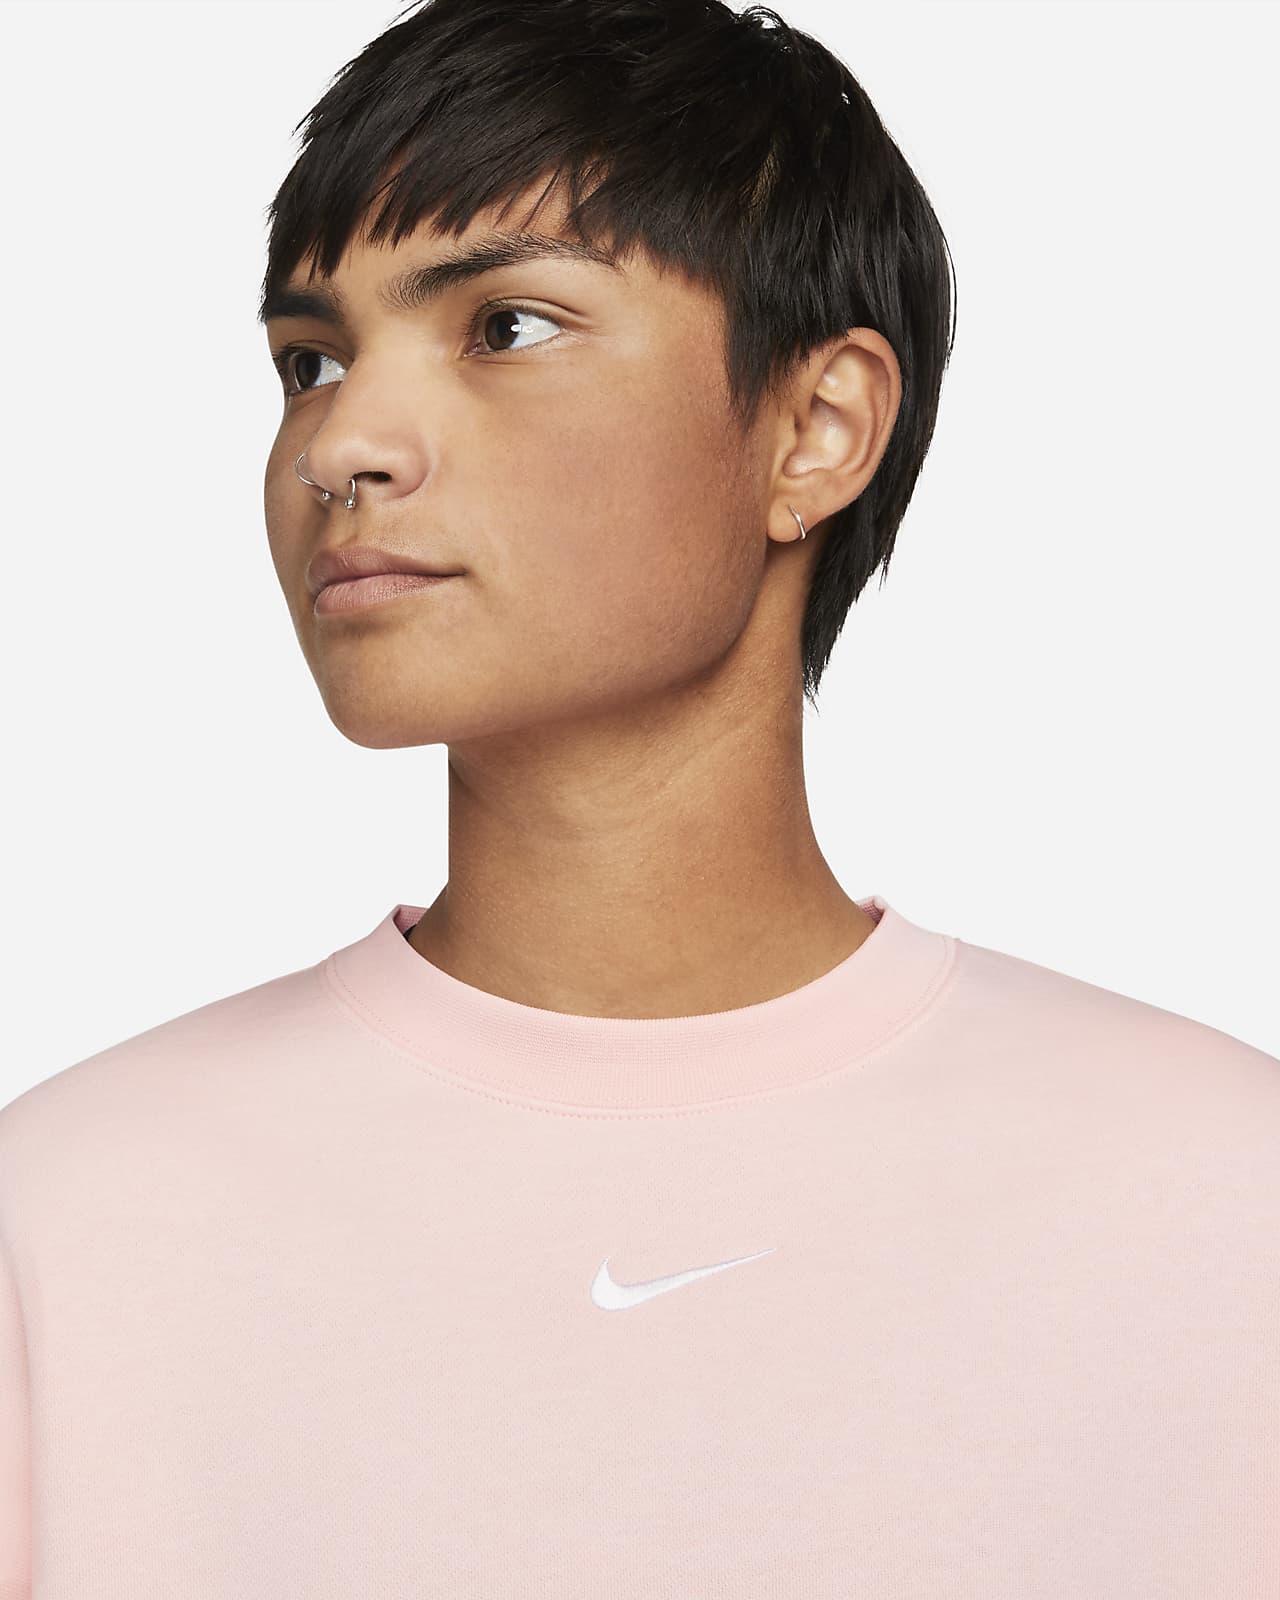 Nike Sportswear Collection Essentials Women's Oversized Fleece Crew ...